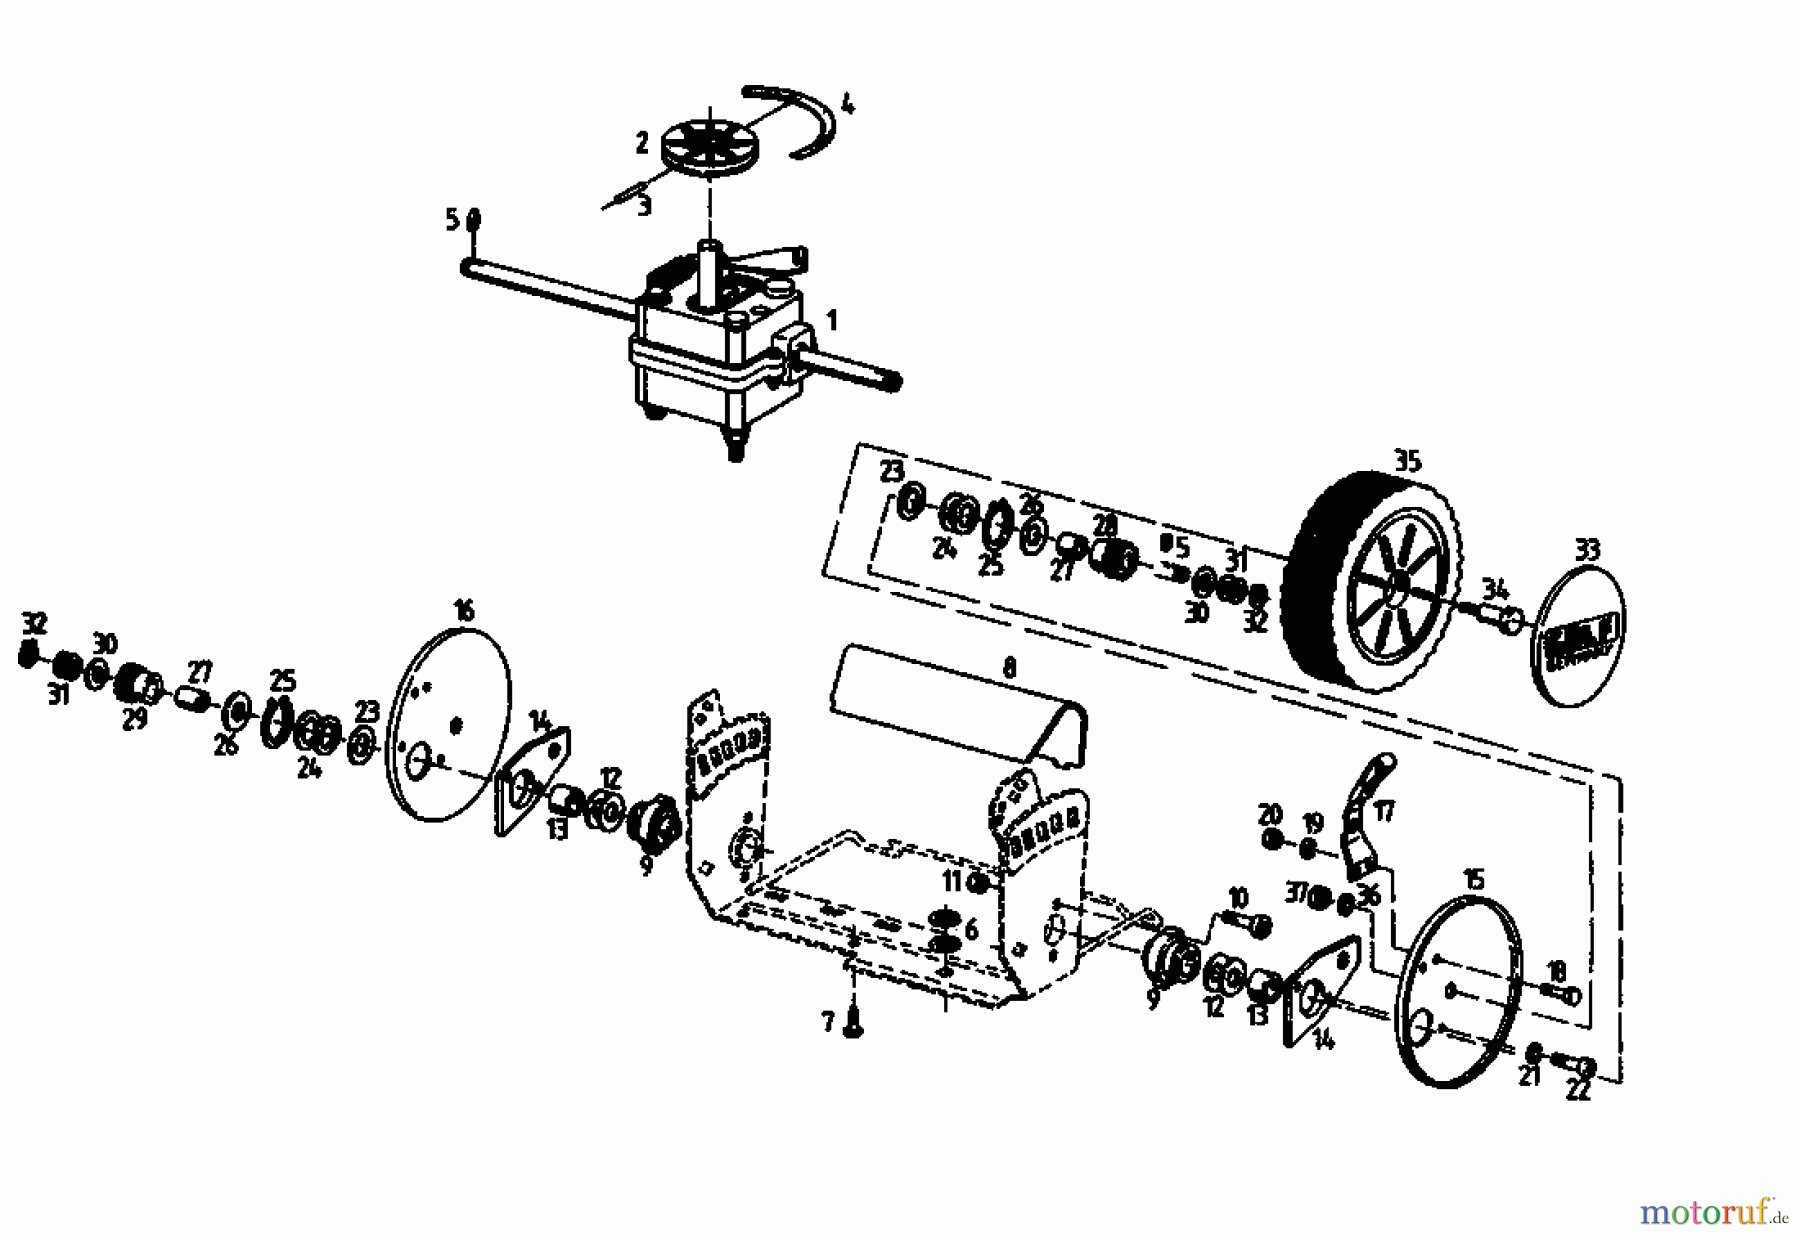  Golf Petrol mower self propelled BRL 04021.06  (1994) Gearbox, Wheels, Cutting hight adjustment